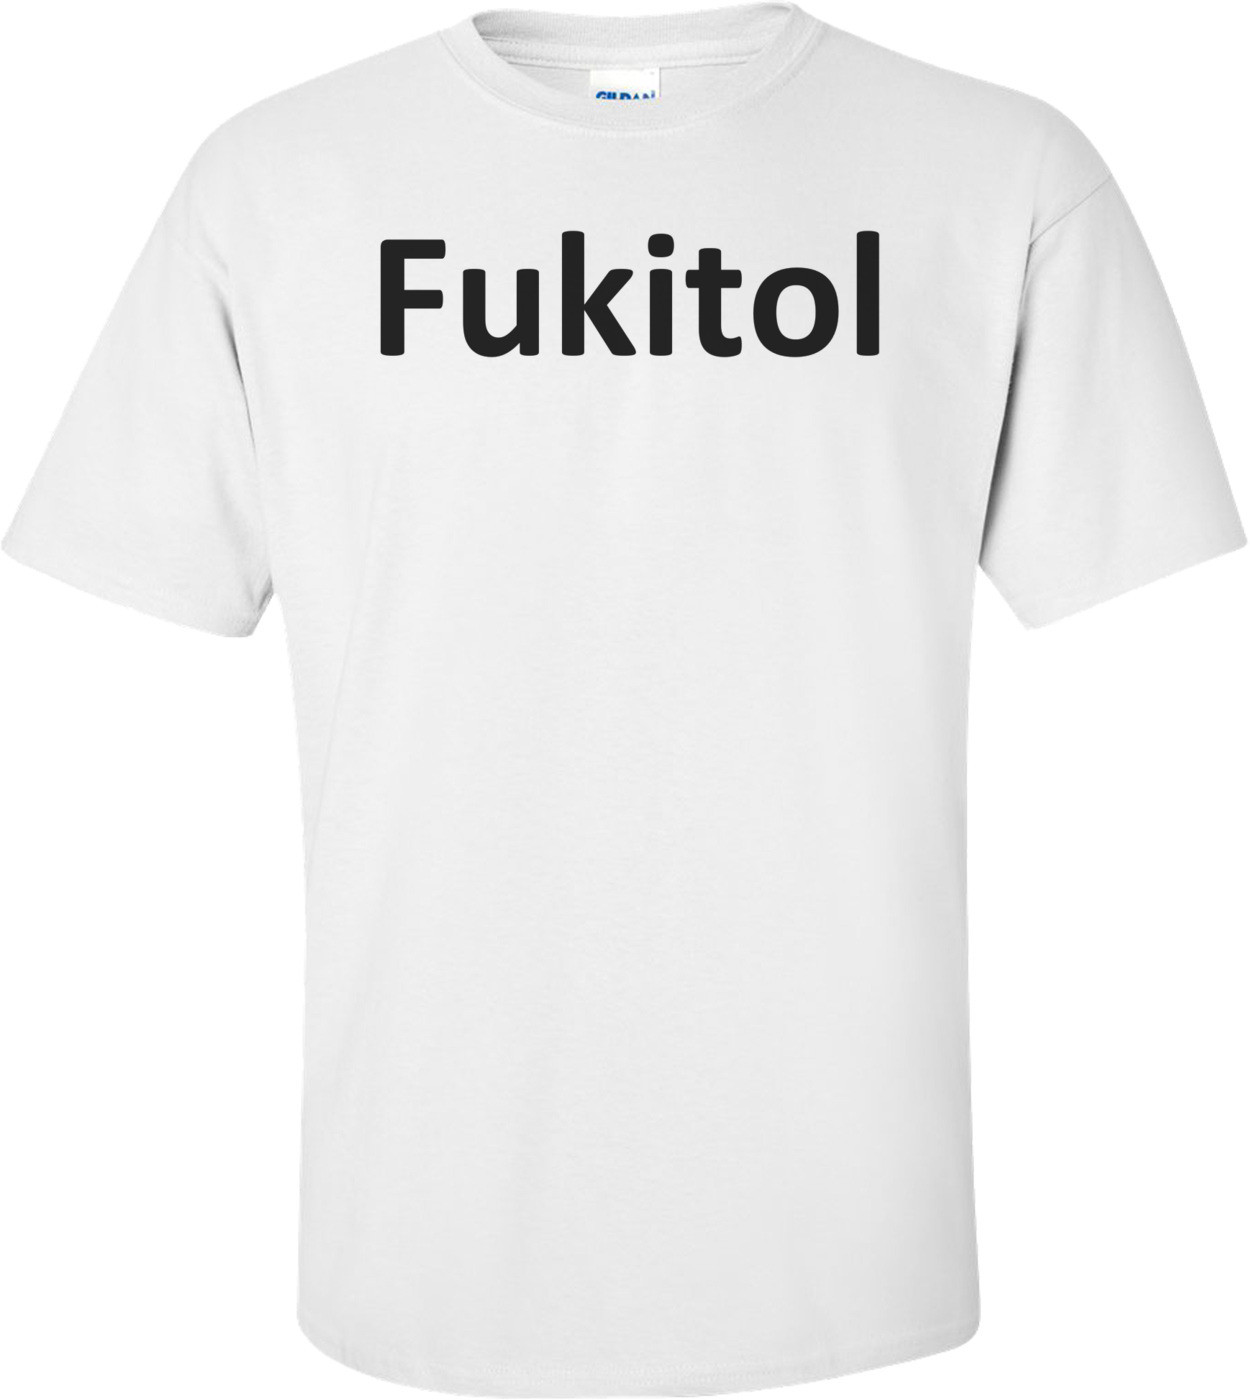 Fukitol T-Shirt